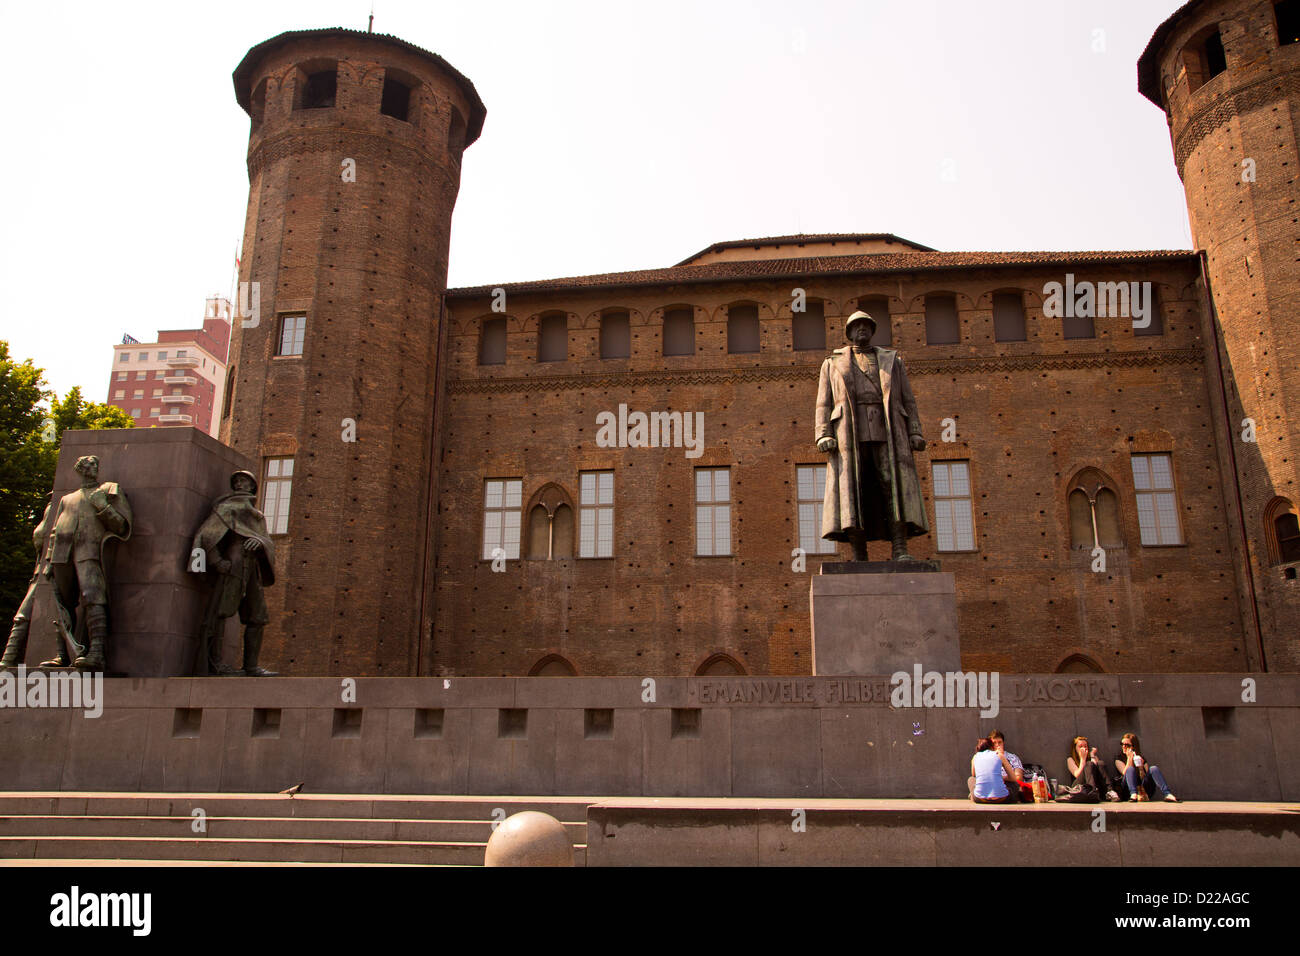 The Emanuele Filiberto Duca D'Aosta monument in Turin Italy Stock Photo